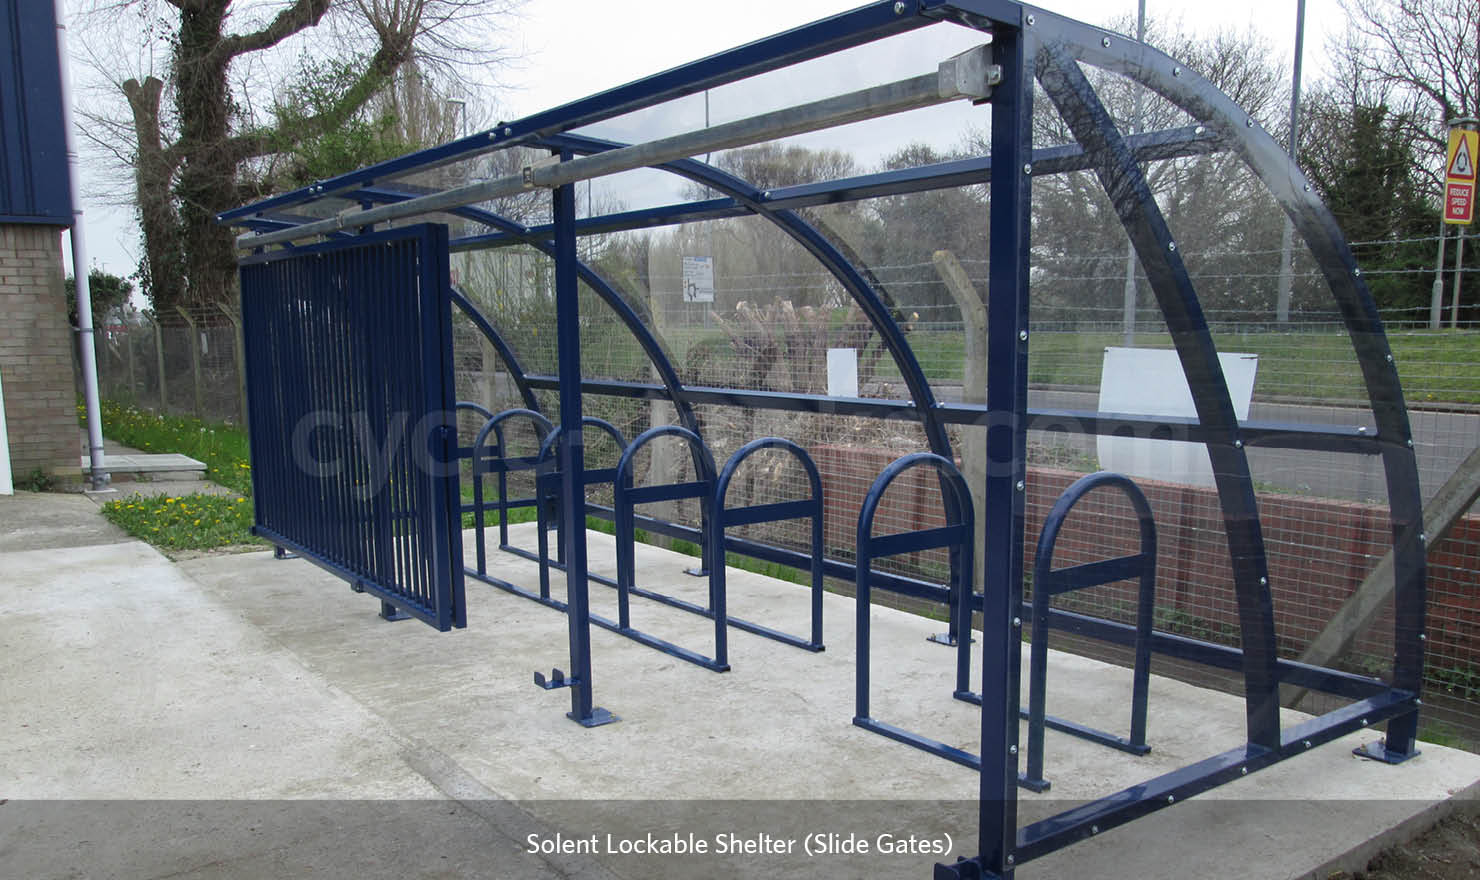 External Bike Shelter with lockable gates